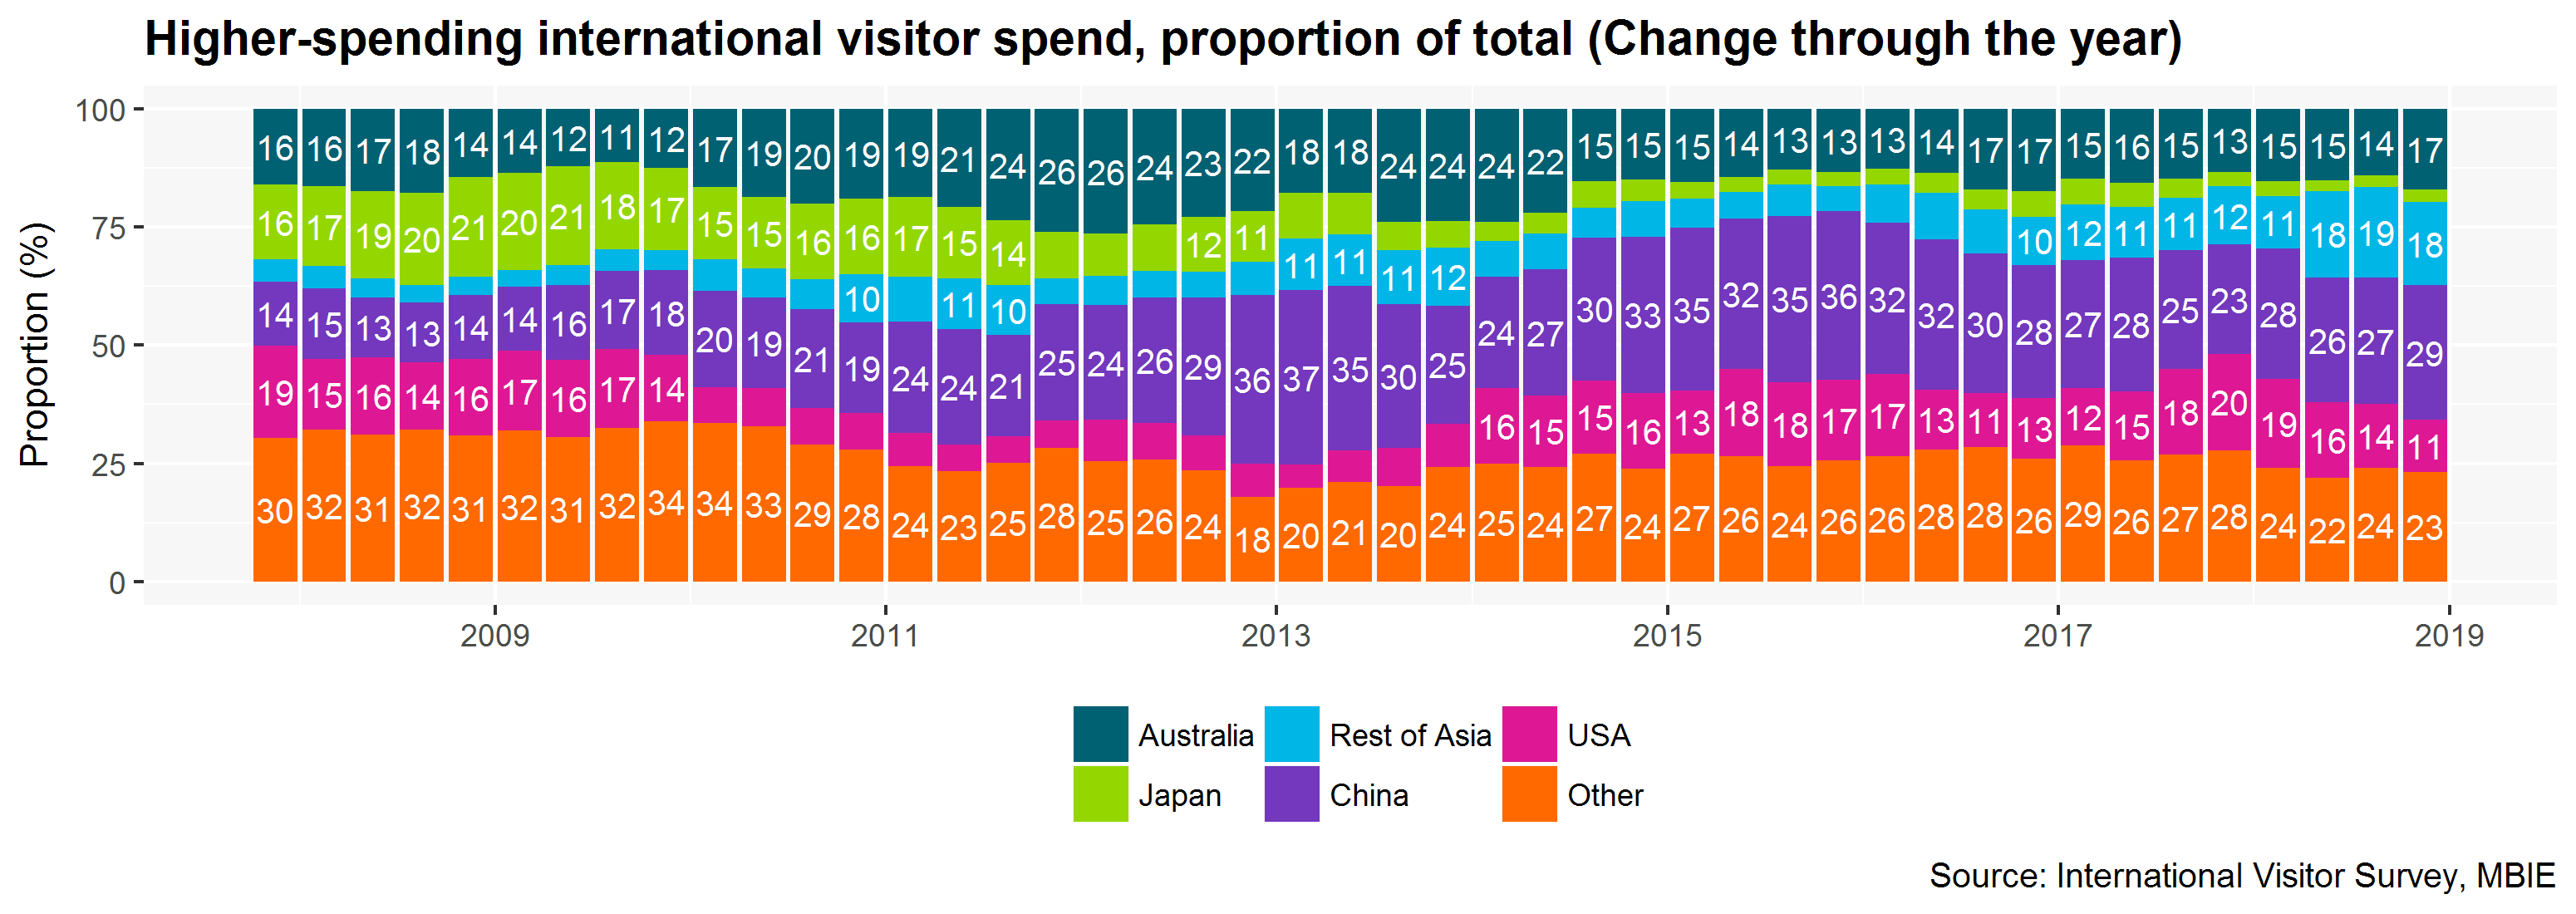 Higher-spending international visitor spending by country of origin